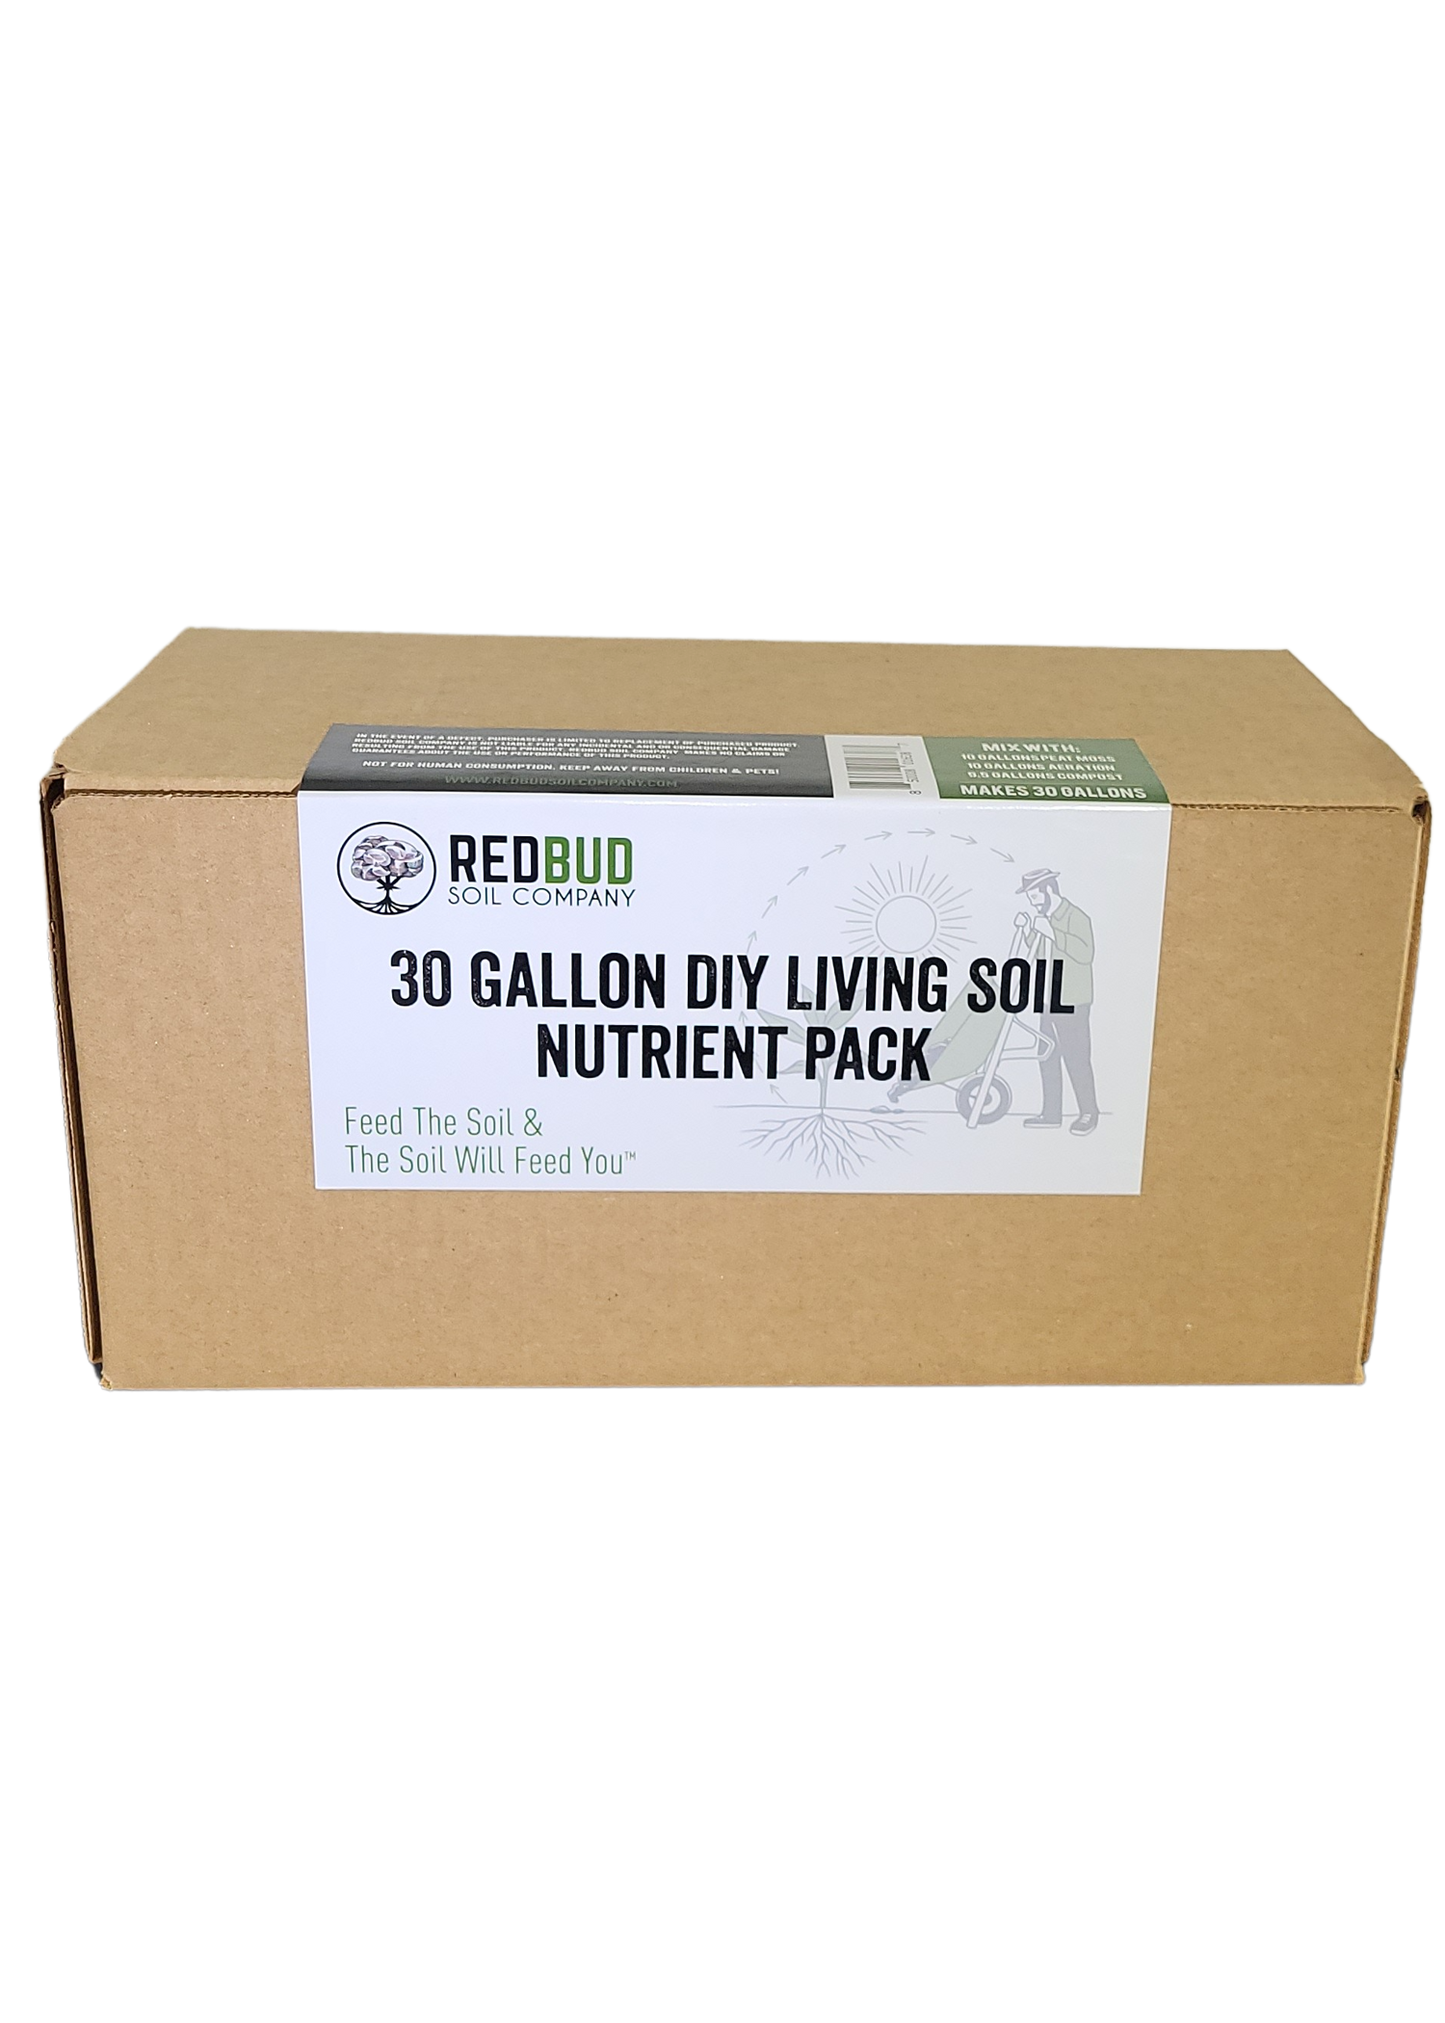 30 Gallon DIY Living Soil Nutrient Pack